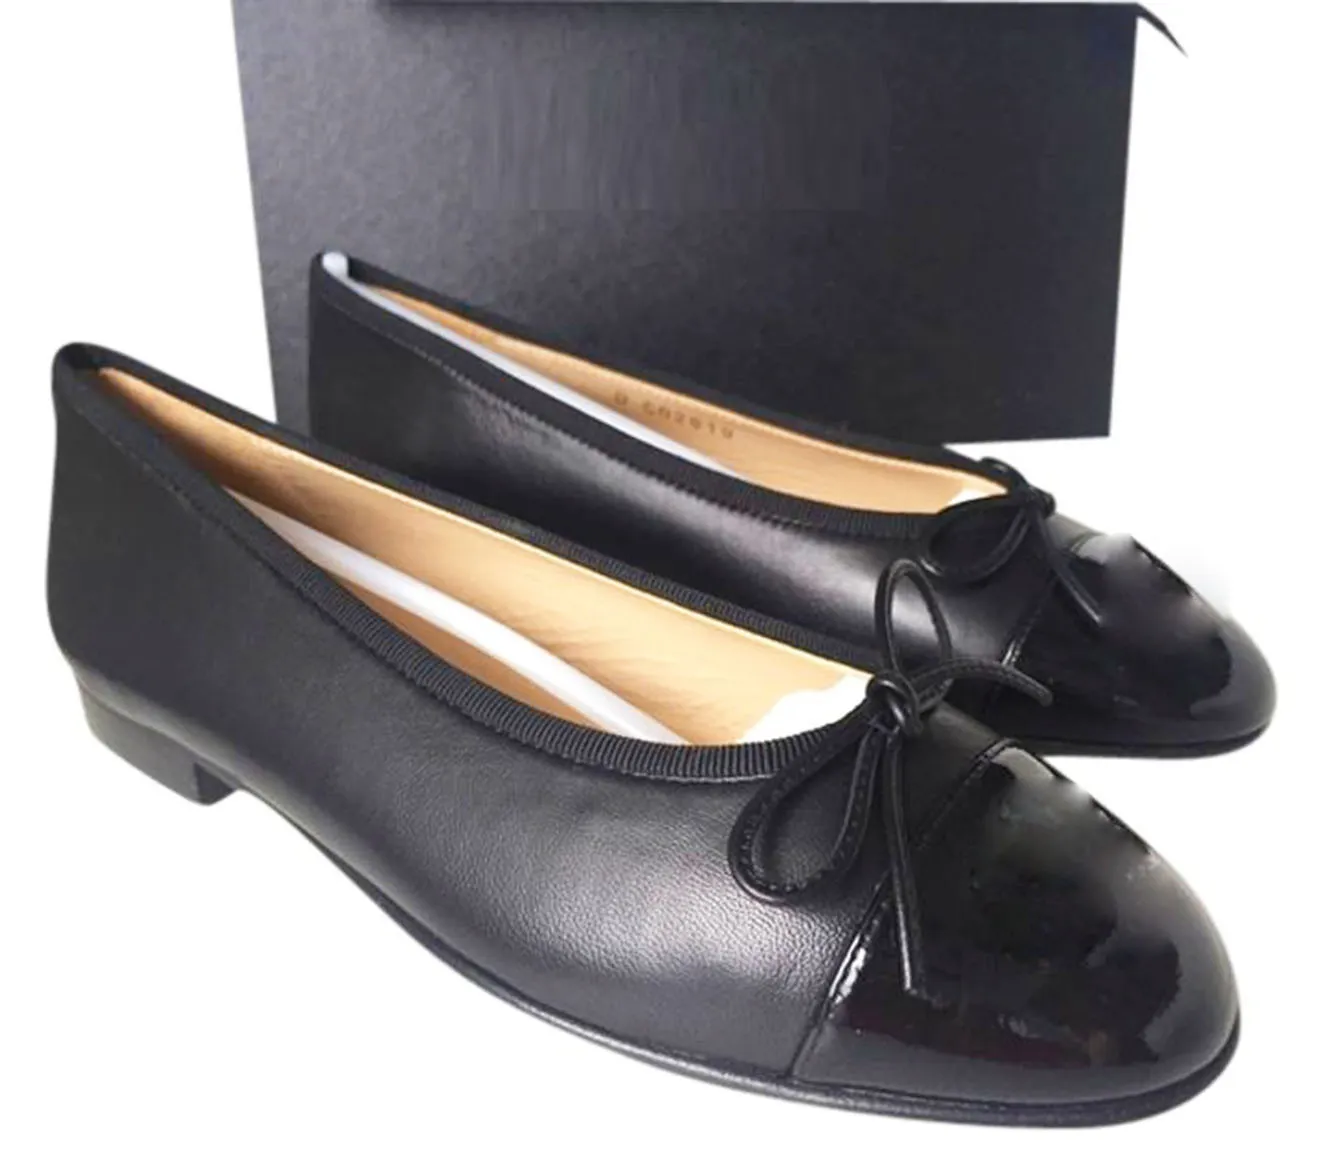 Designer kvinnor kvinnor whit skor espadrilles medheeled sandaler grova häl läder blomma svart ballett skor platt skor super mjuk blommig 2